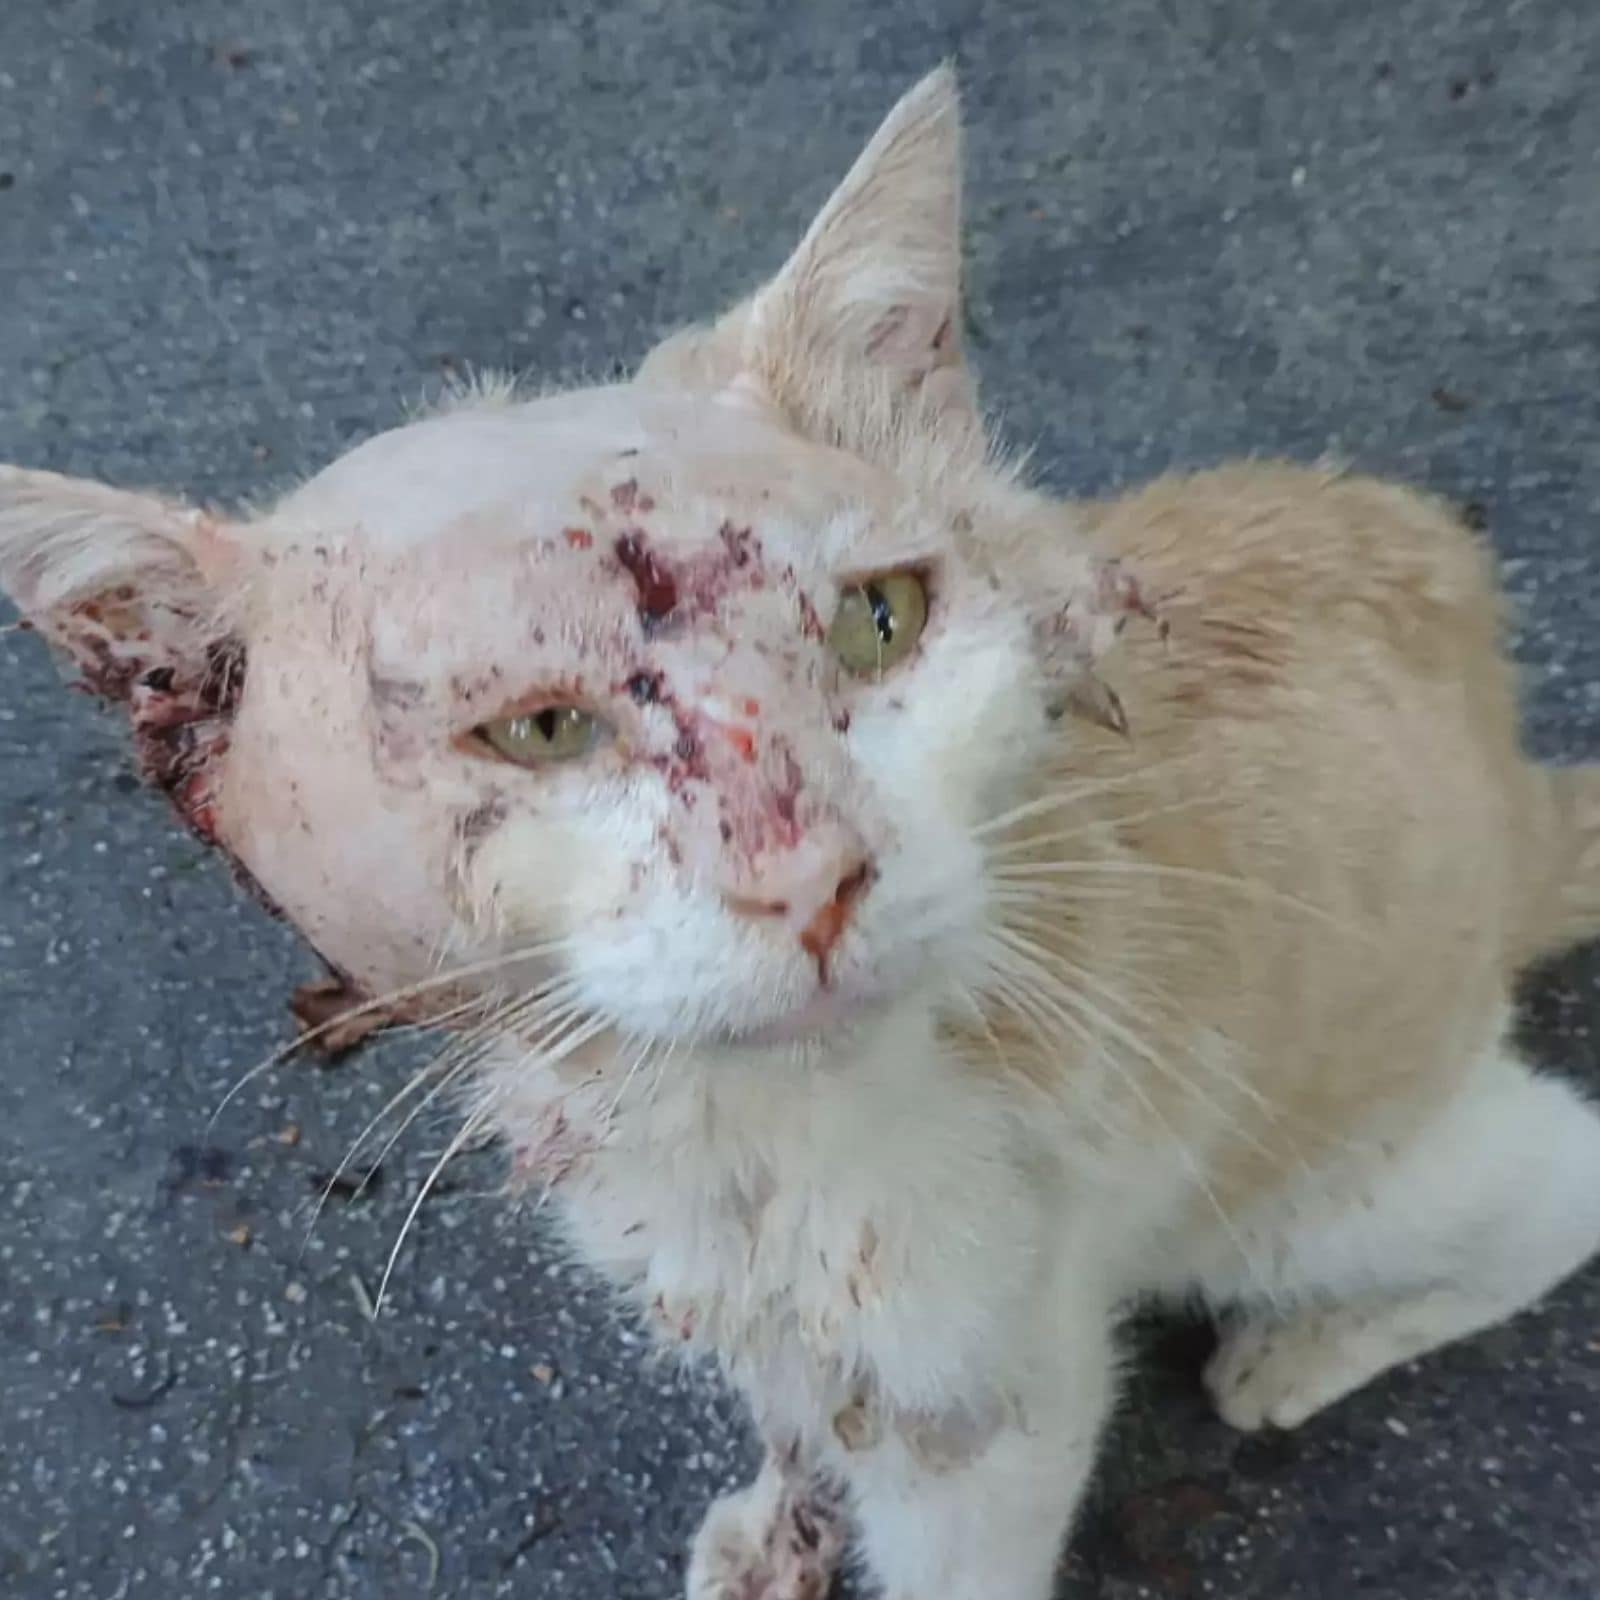 Injured stray cat